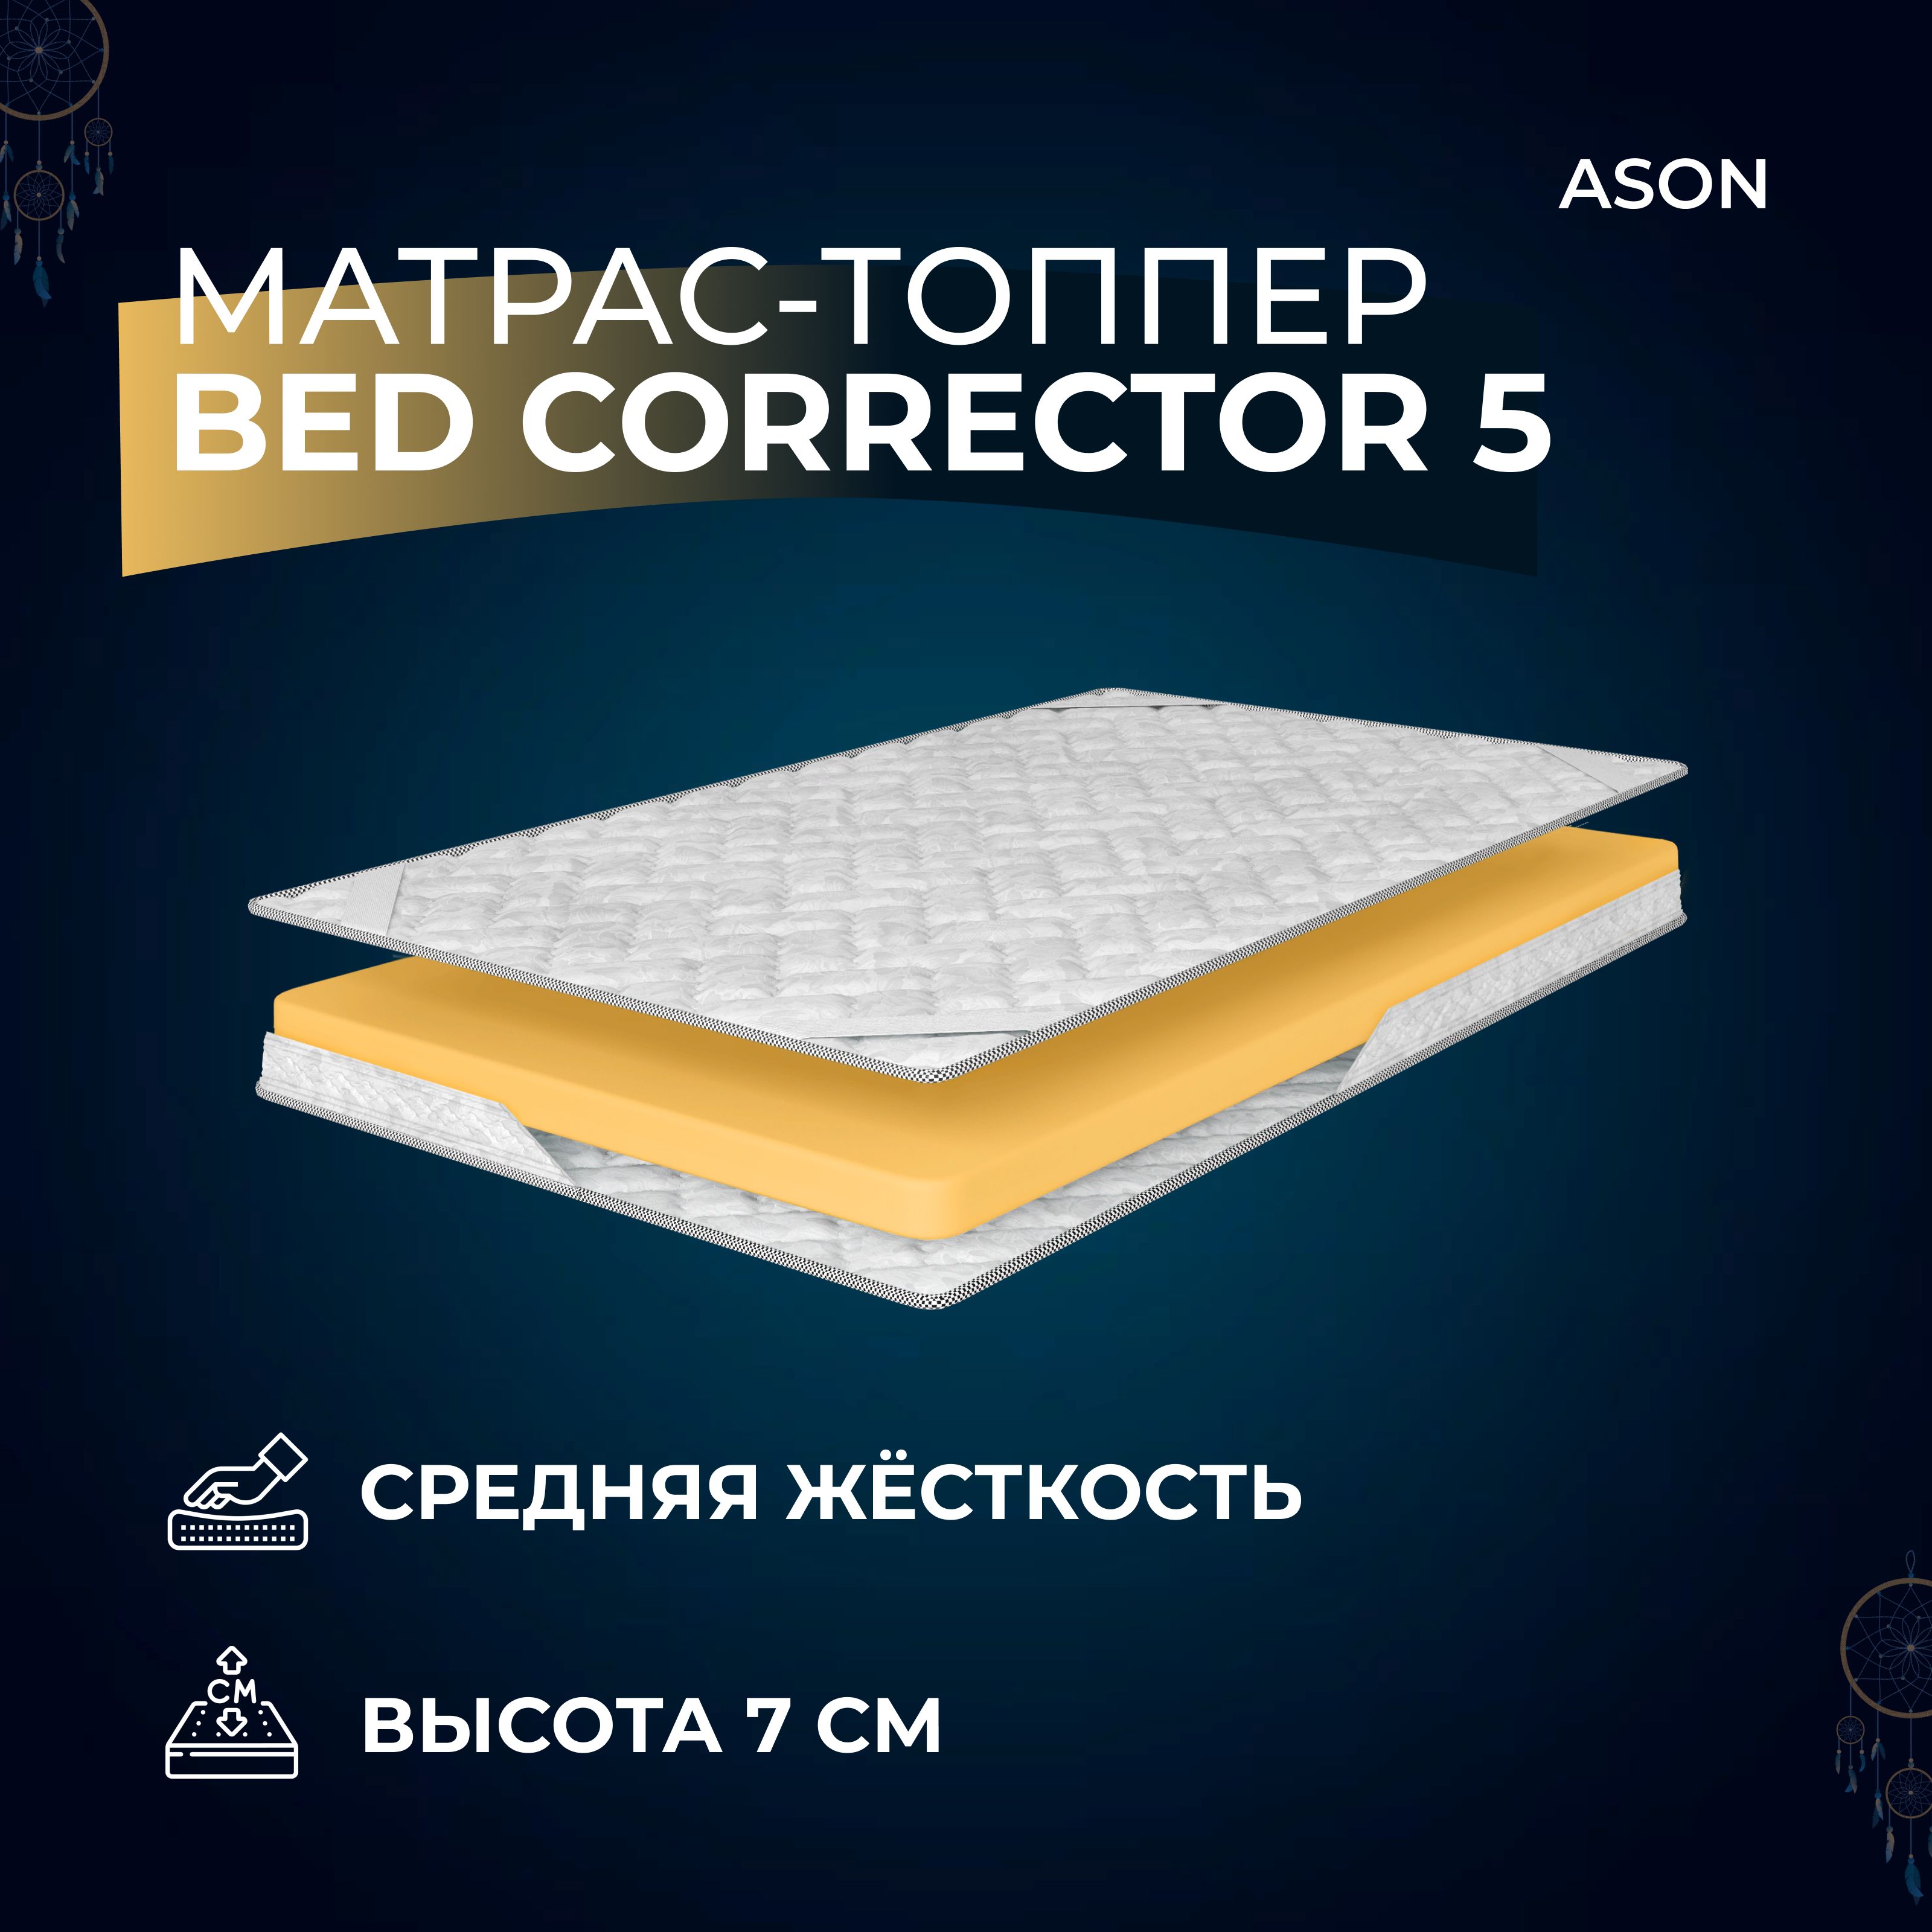 Матрас-топпер 200х200 Ason, Bed corrector 5